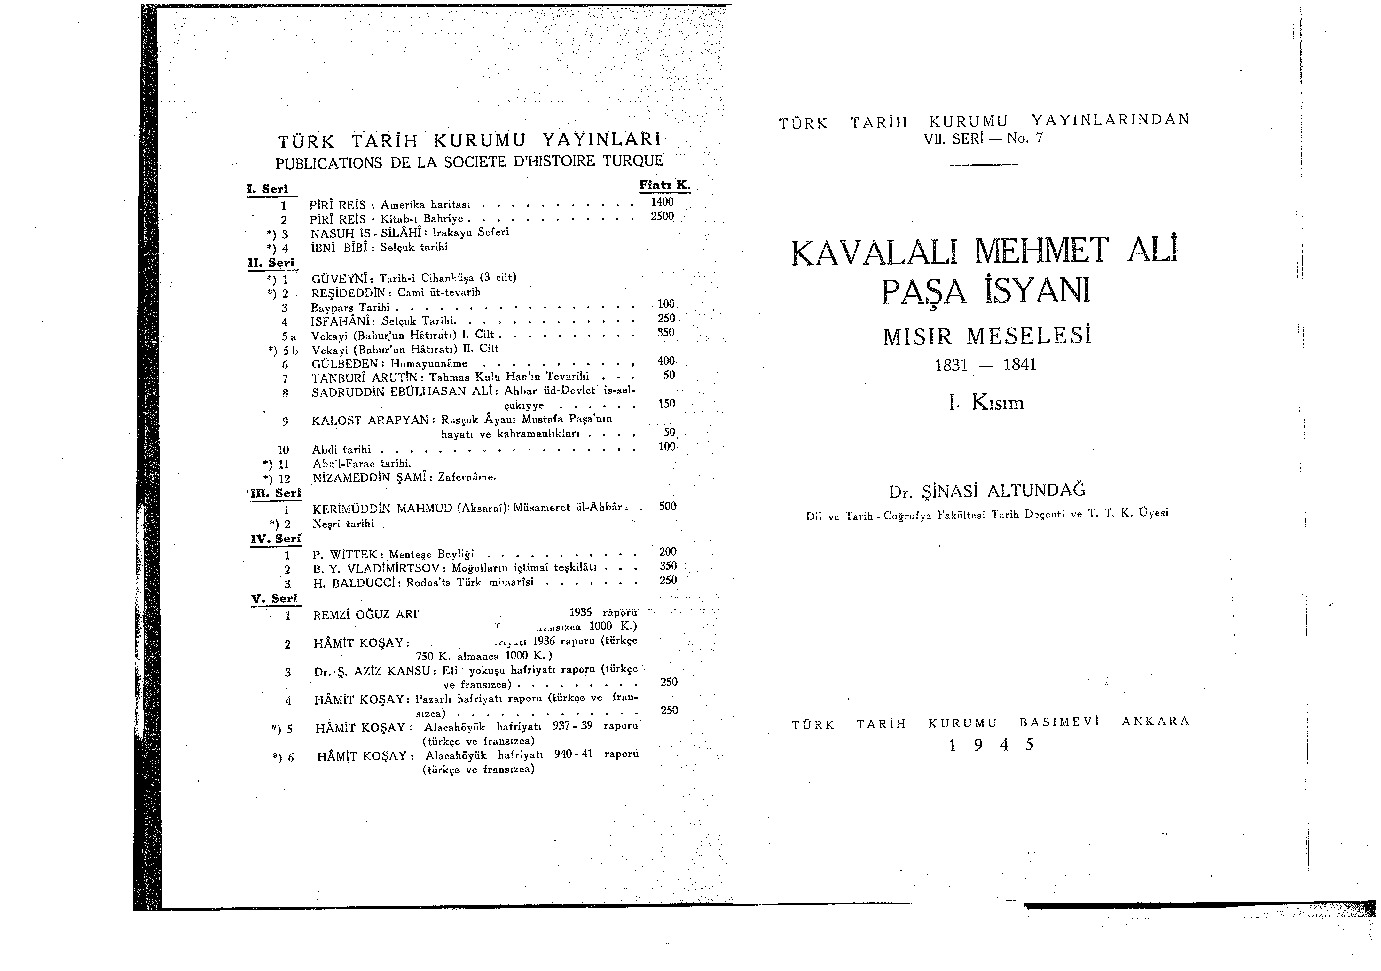 Kavalalı Mehmed Ali Paşa usyani-Misir Meselesi-1-Şinasi Altundağ-1945-170s